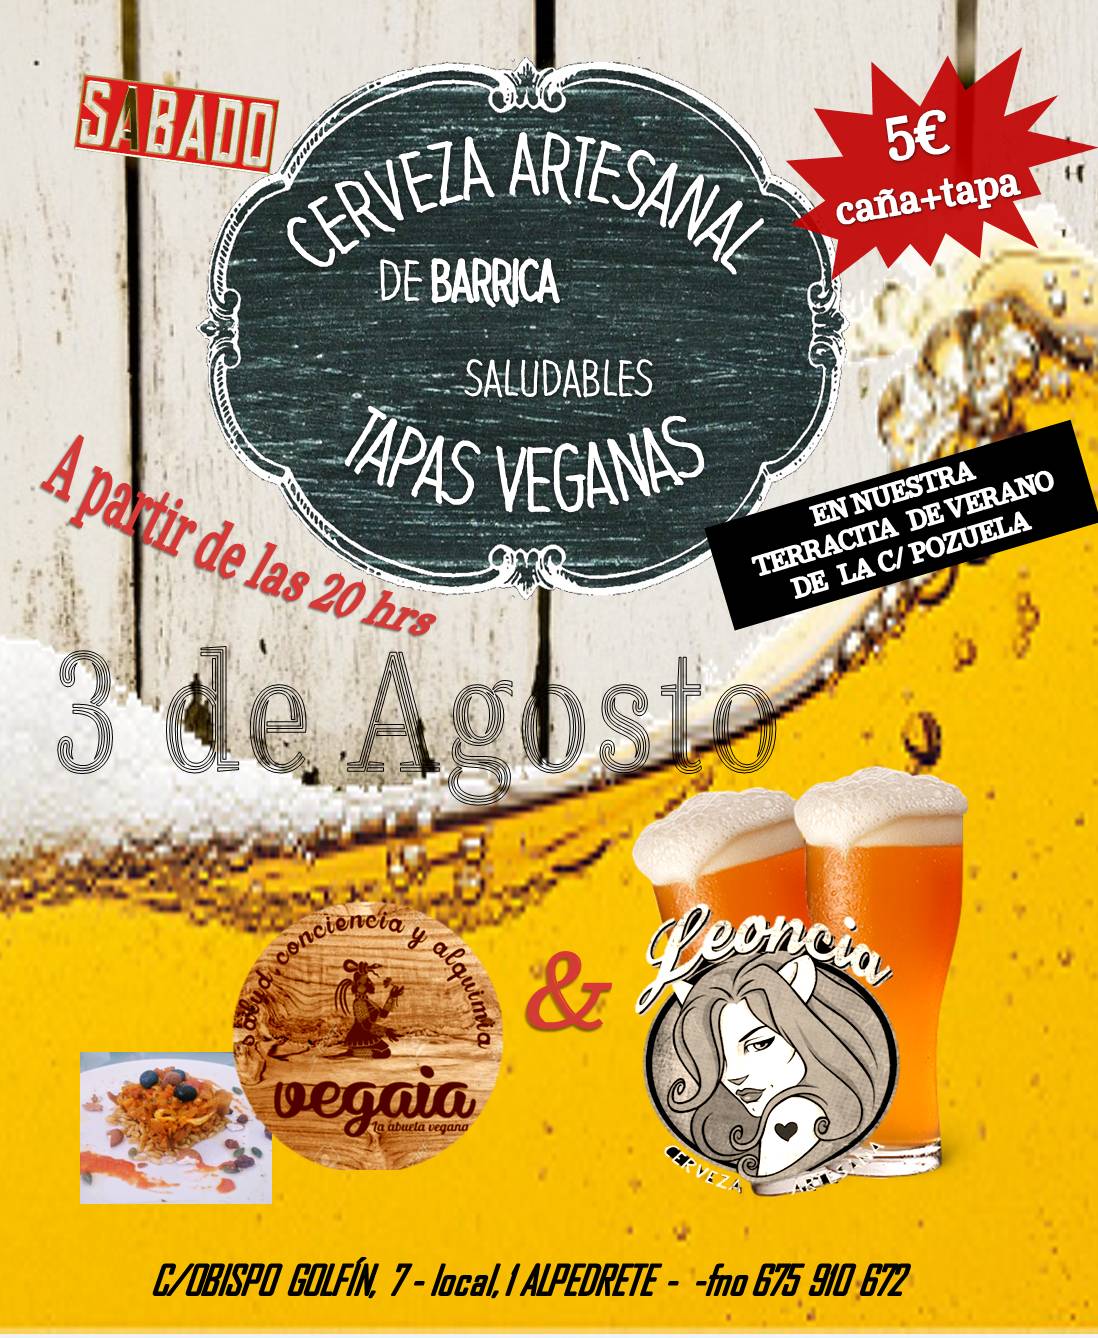 Tapas Veganas y cerveza artesana en Alpedrete